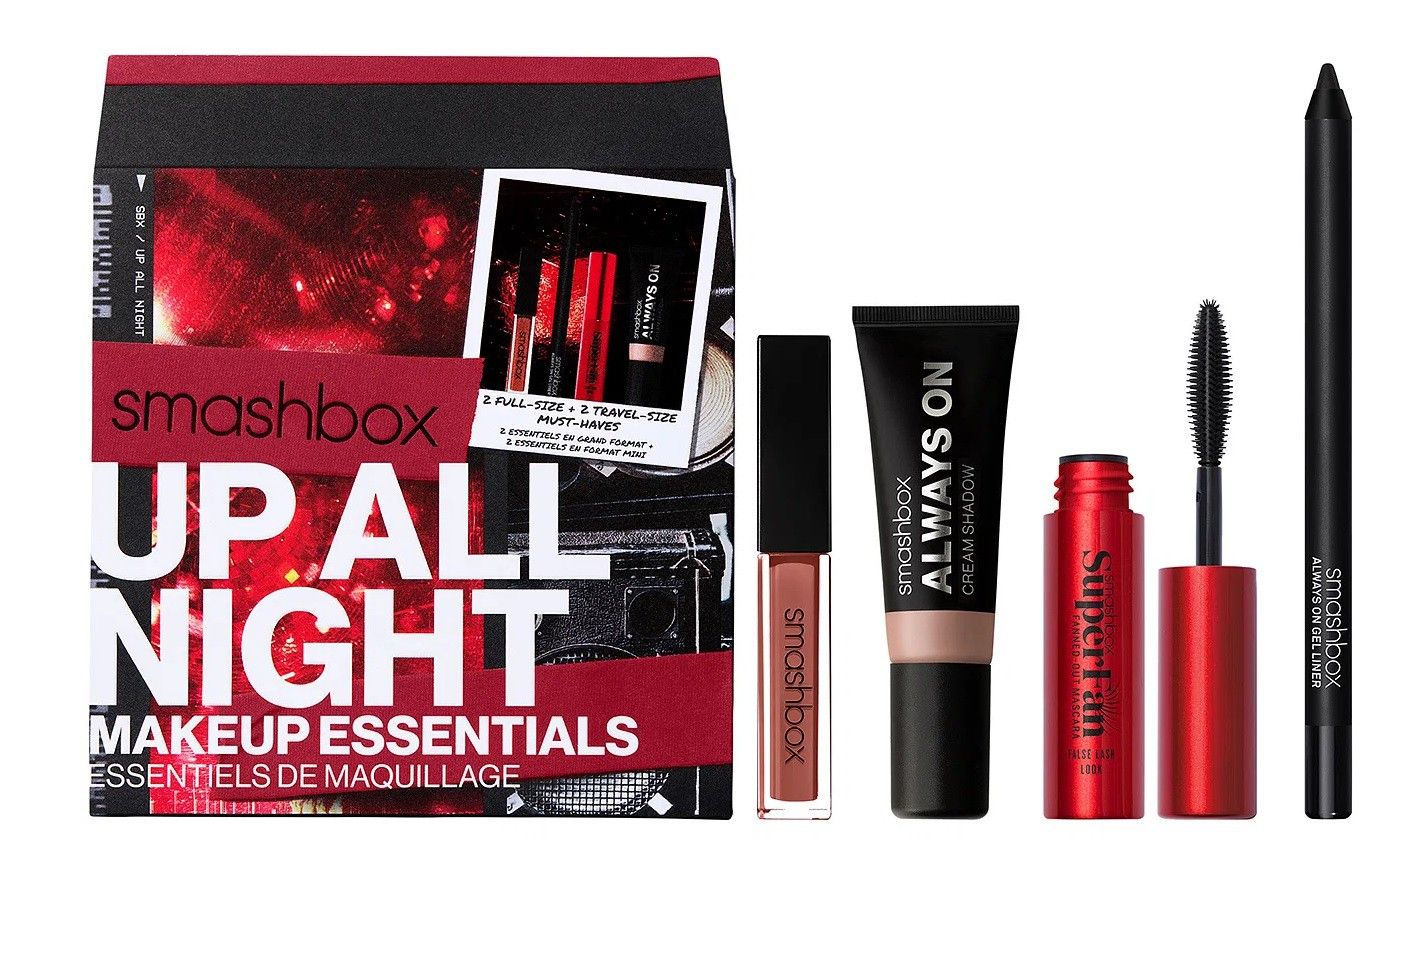 Smashbox SET Up All Night Makeup Essentials